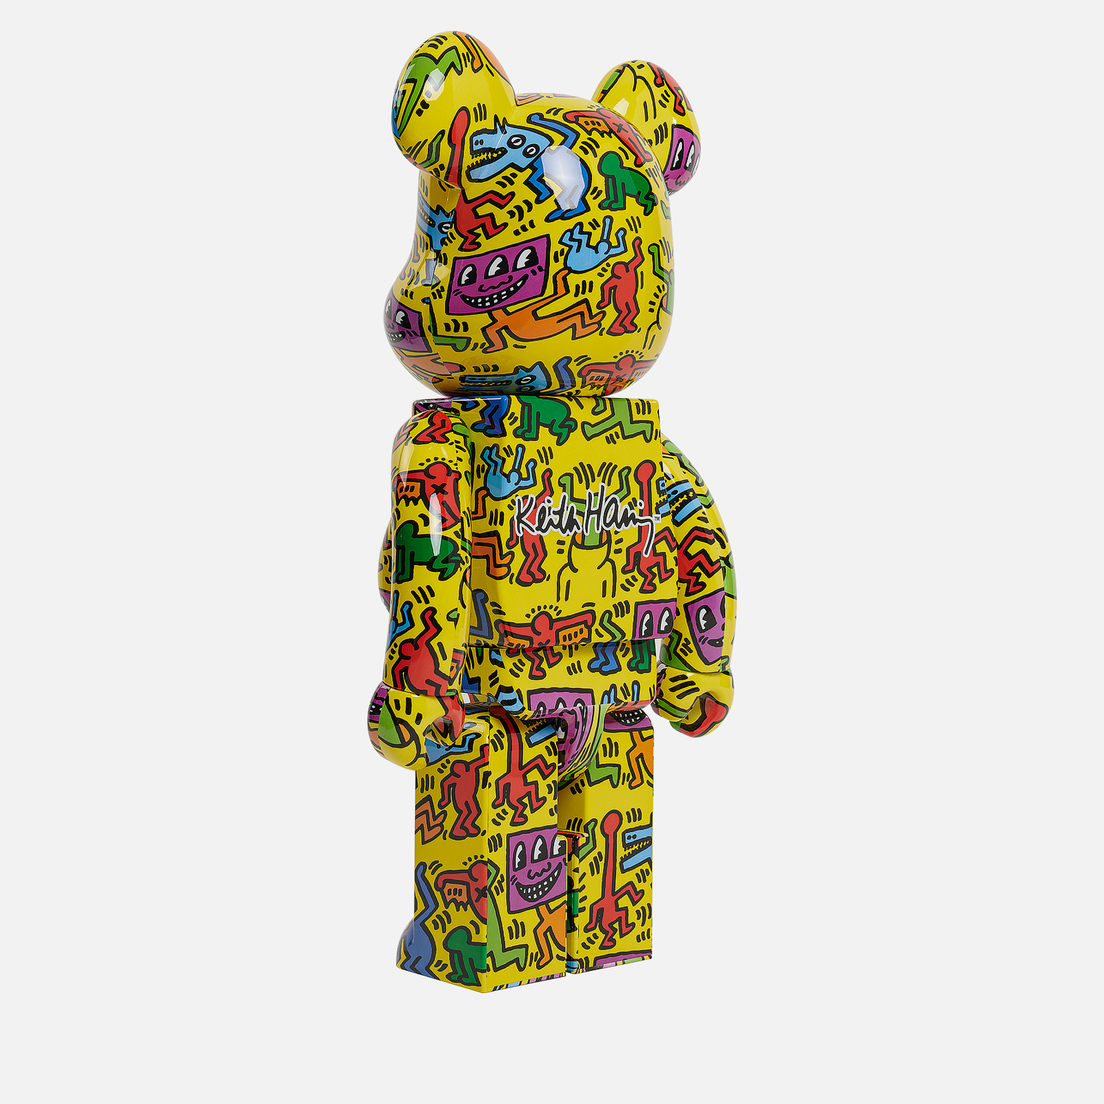 Medicom Toy Игрушка Bearbrick Keith Haring Ver. 5 1000%